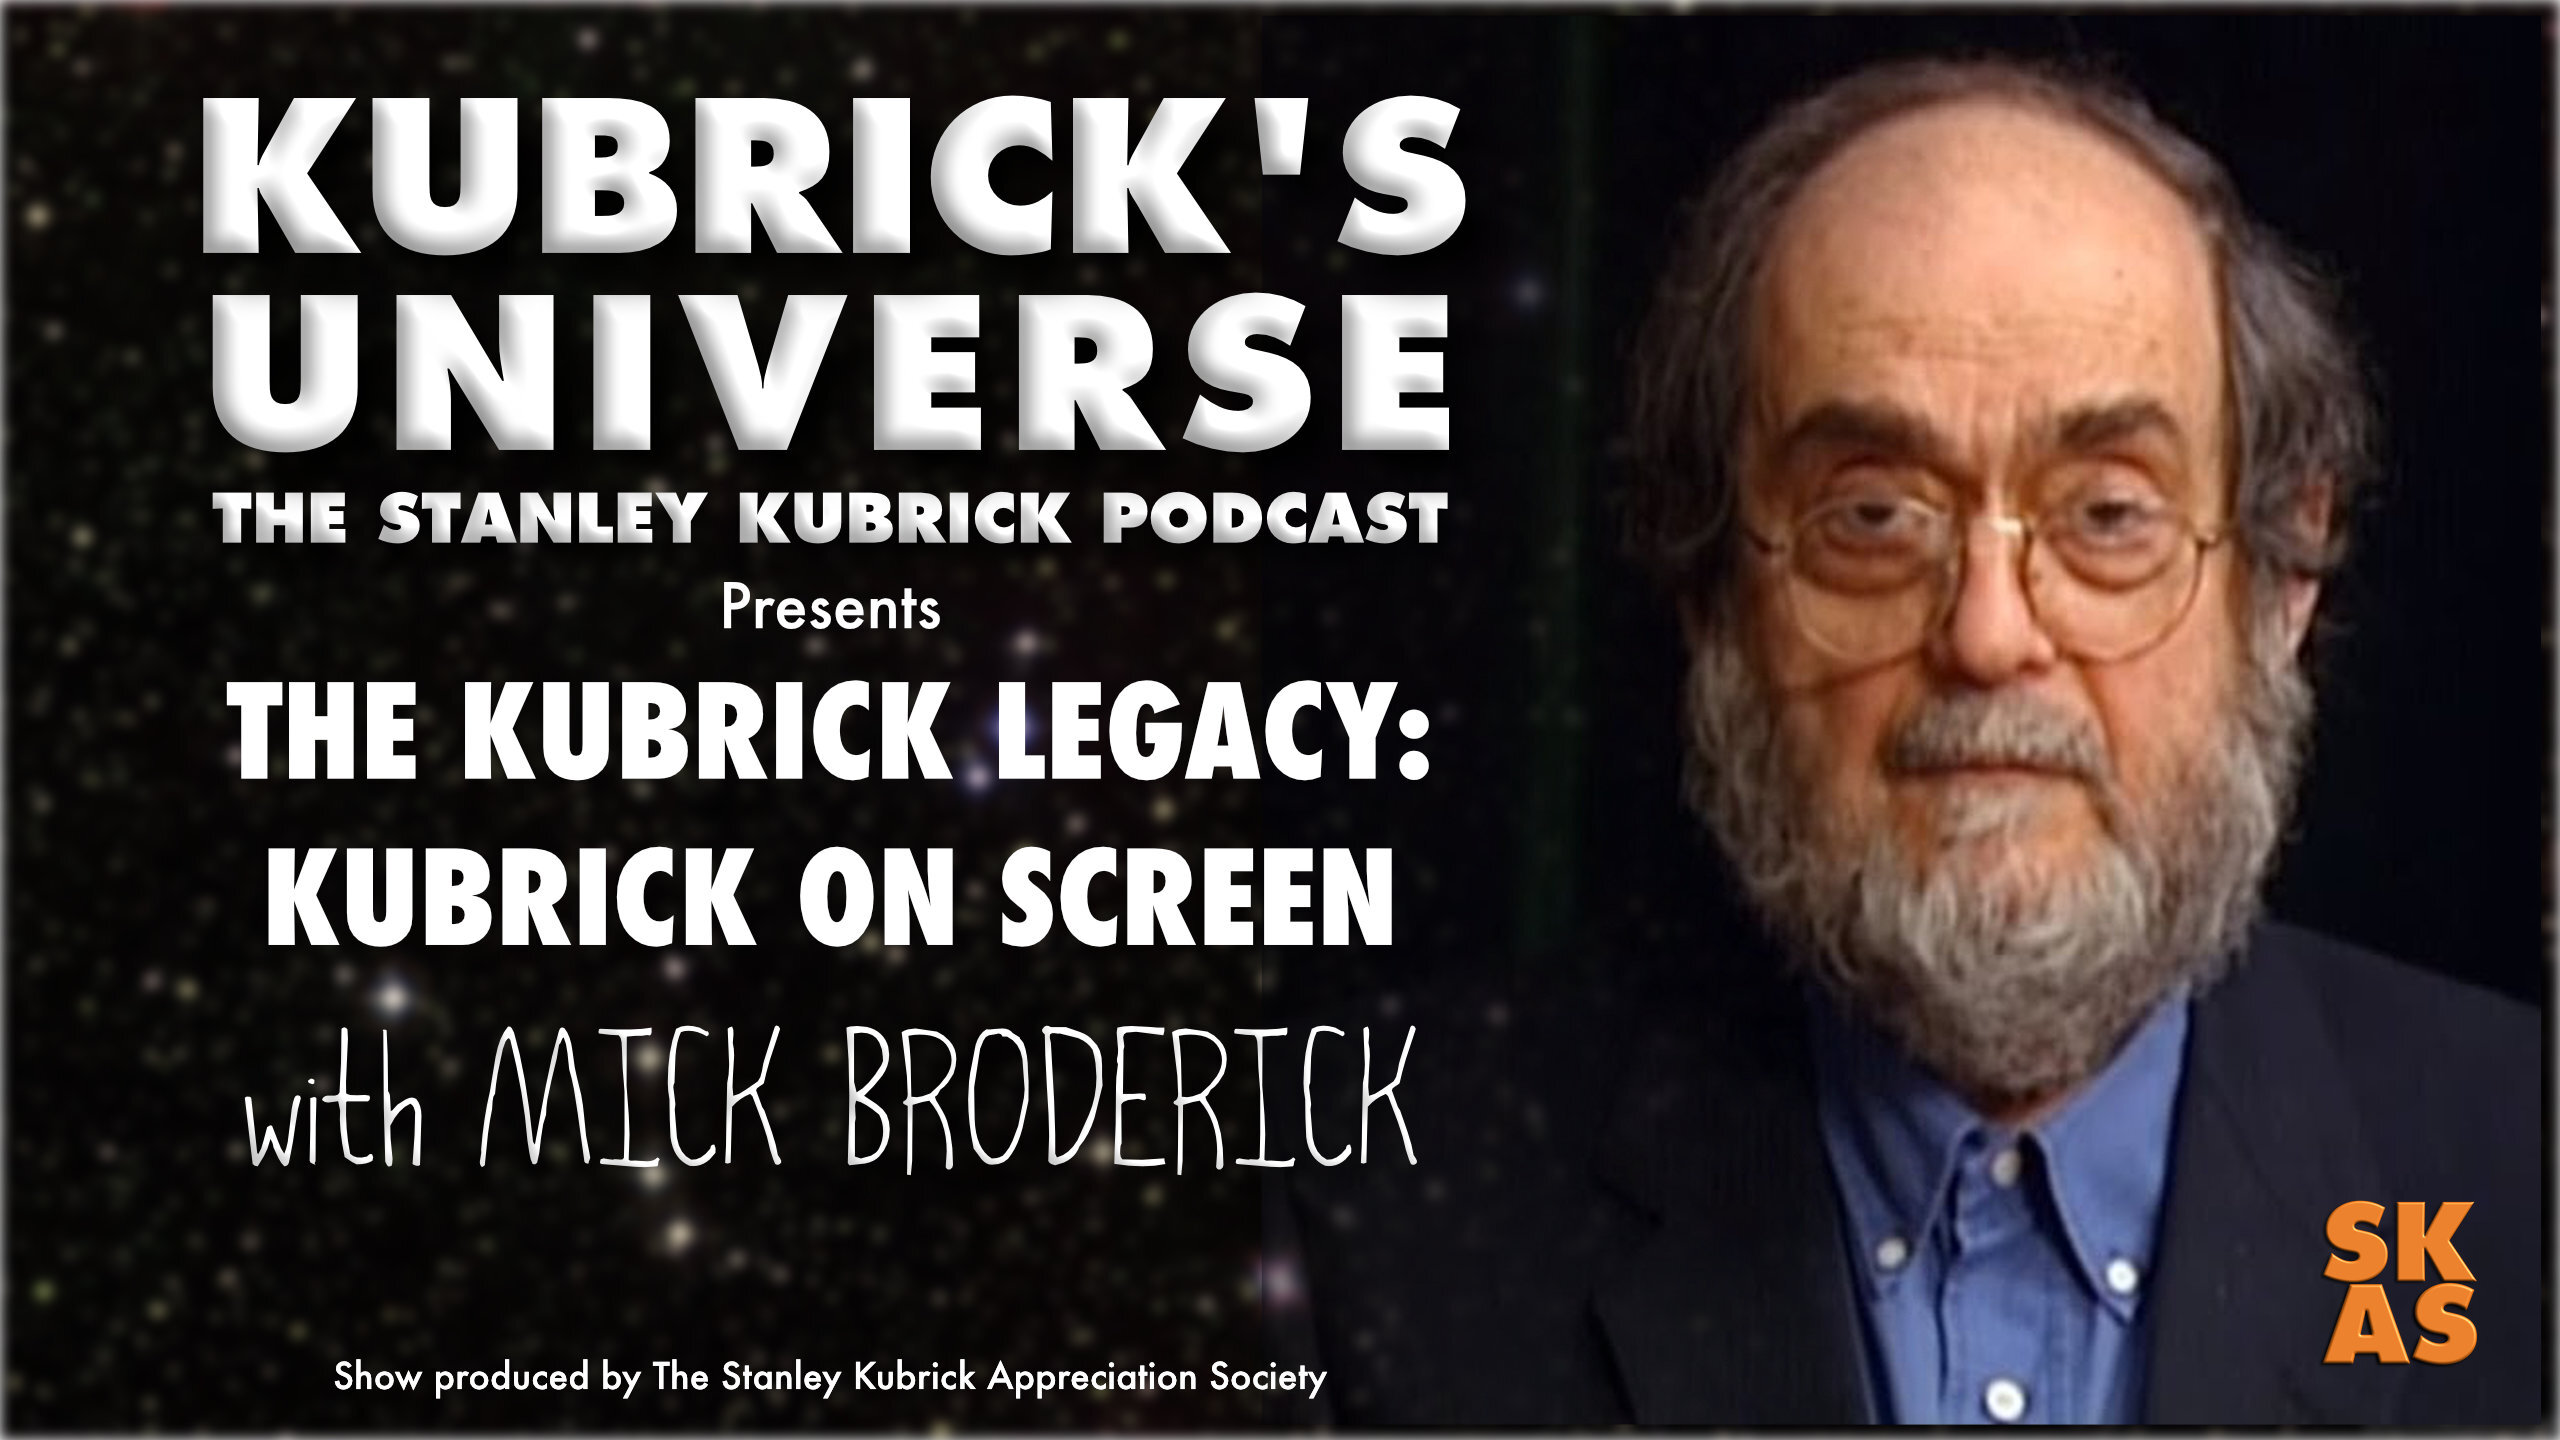 SKAS_Kubrick_s_Universe_Episode_Adverts_-_Episode_25.jpg